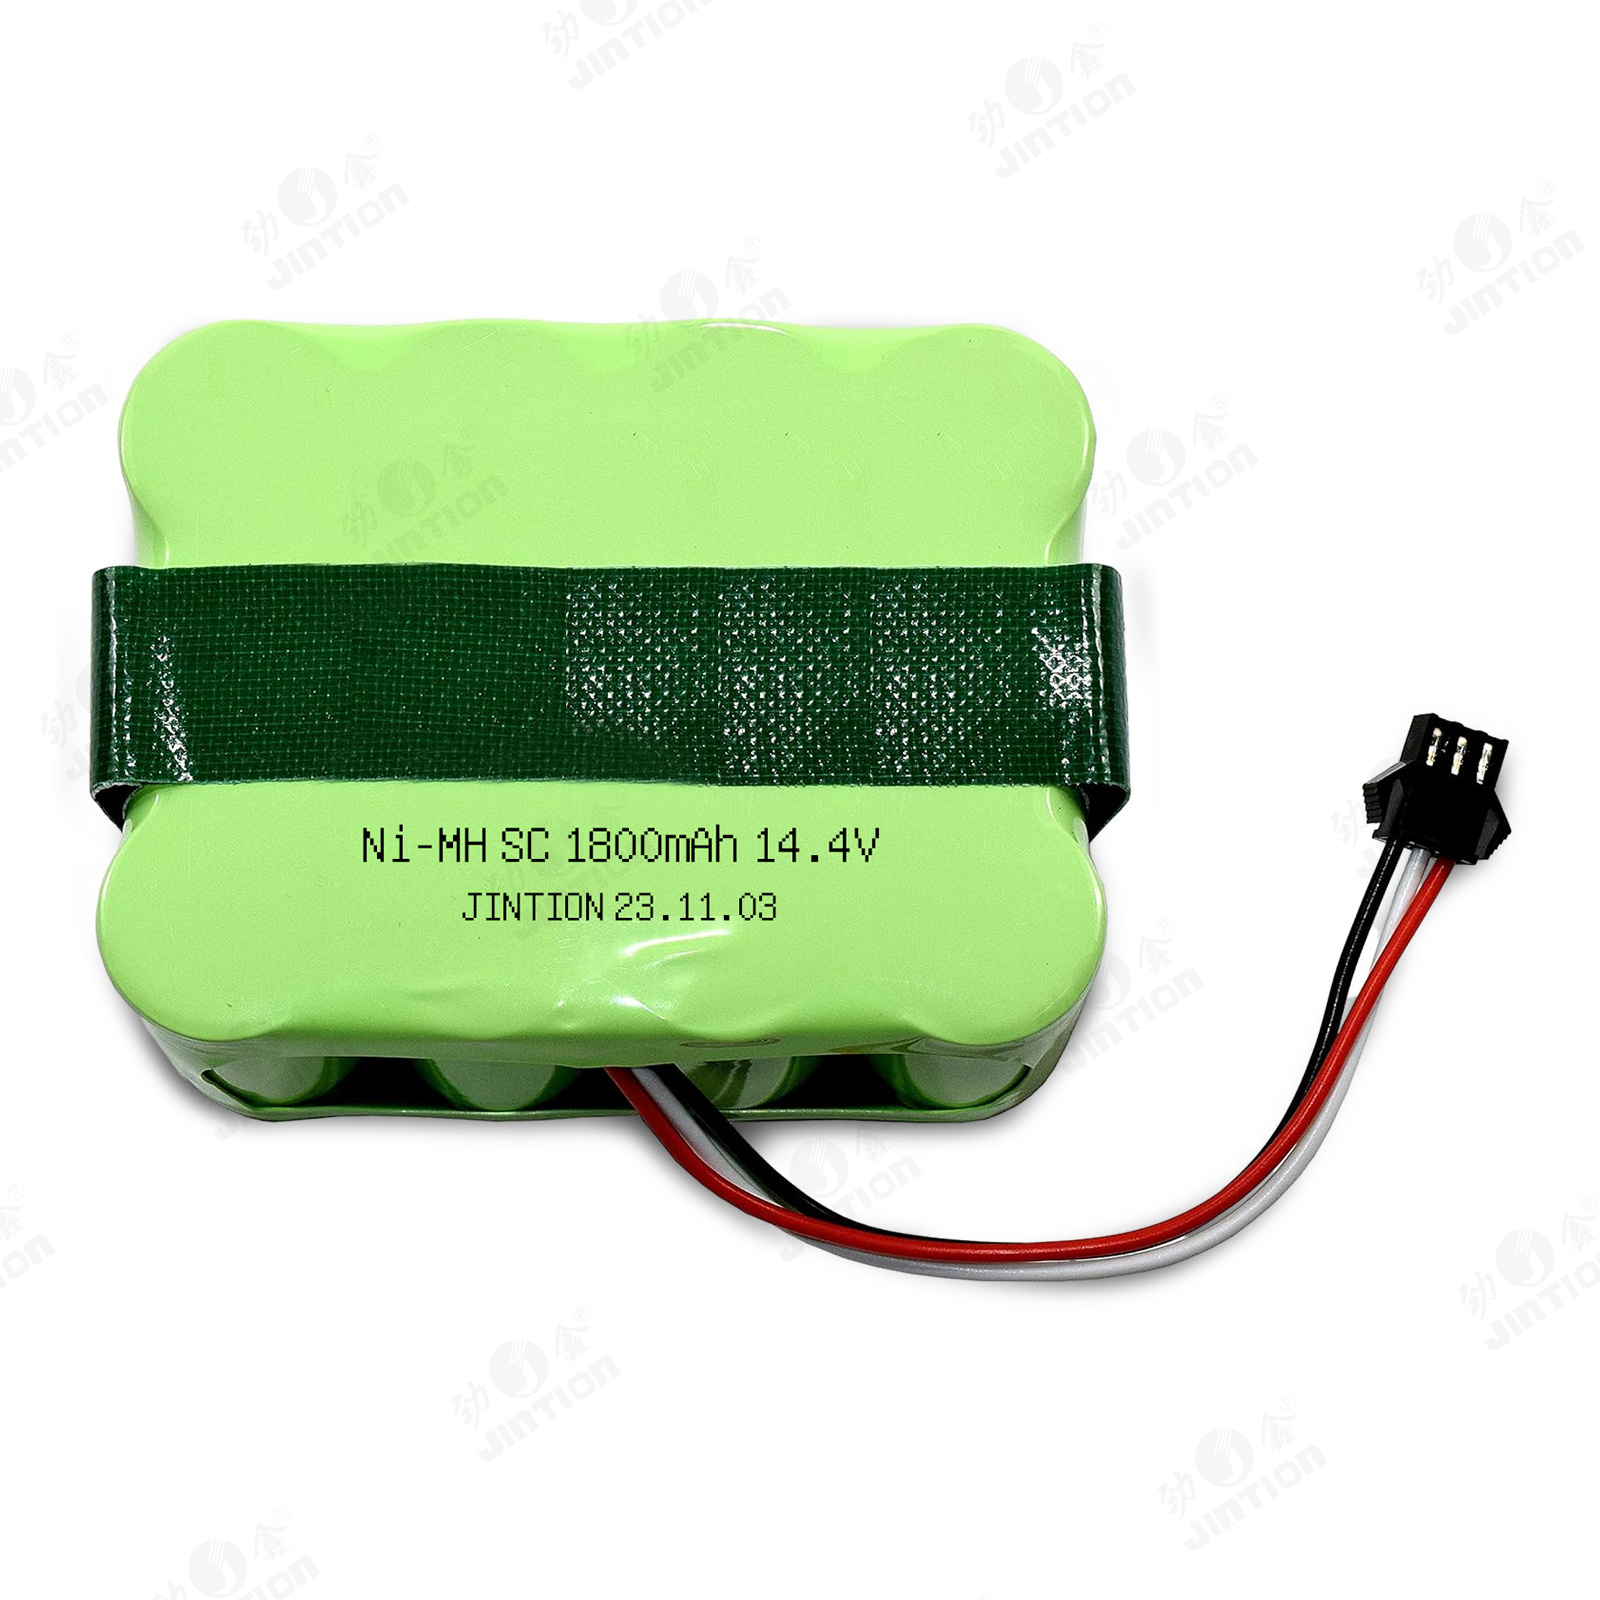 JINTION NIMH SC 1800MAH 14.4V battery hybrid 14.4v battery ni-mh battery SUB C 2200 for Classic Pet Robotic Vacuum Cleaner